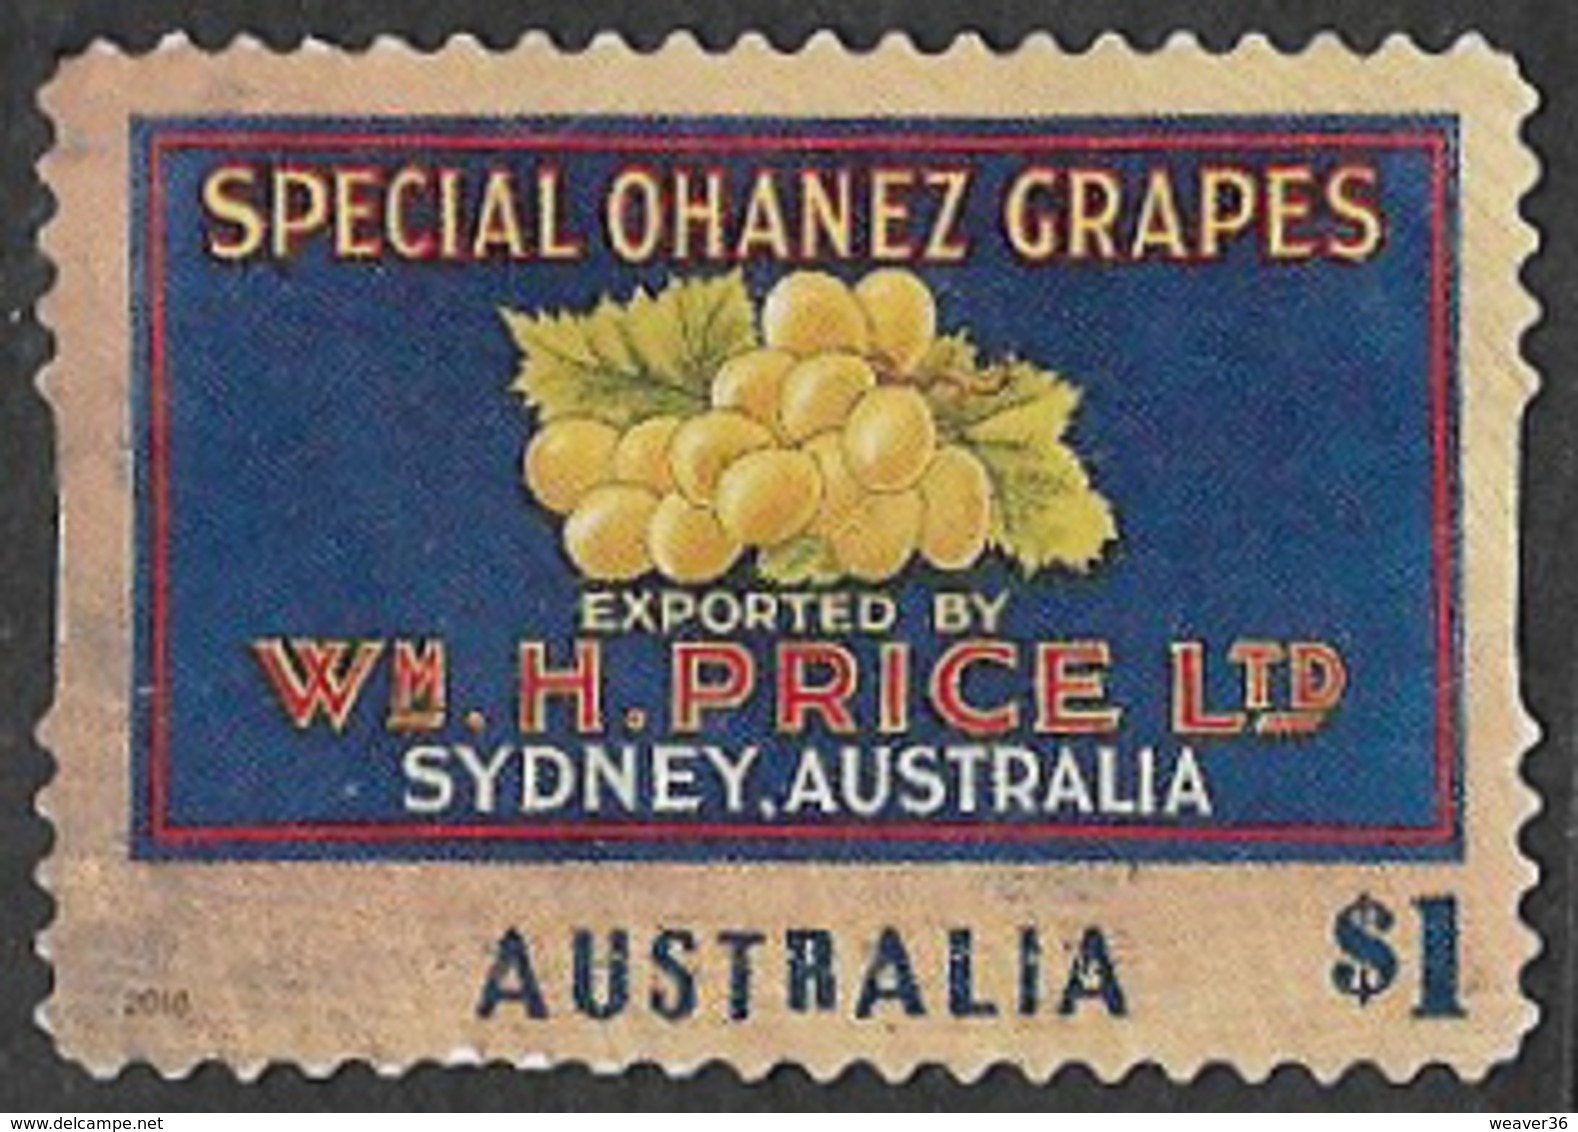 Australia 2016 Fruit Labels $1 Type 4 Self Adhesive Good/fine Used [38/31213/ND] - Usati